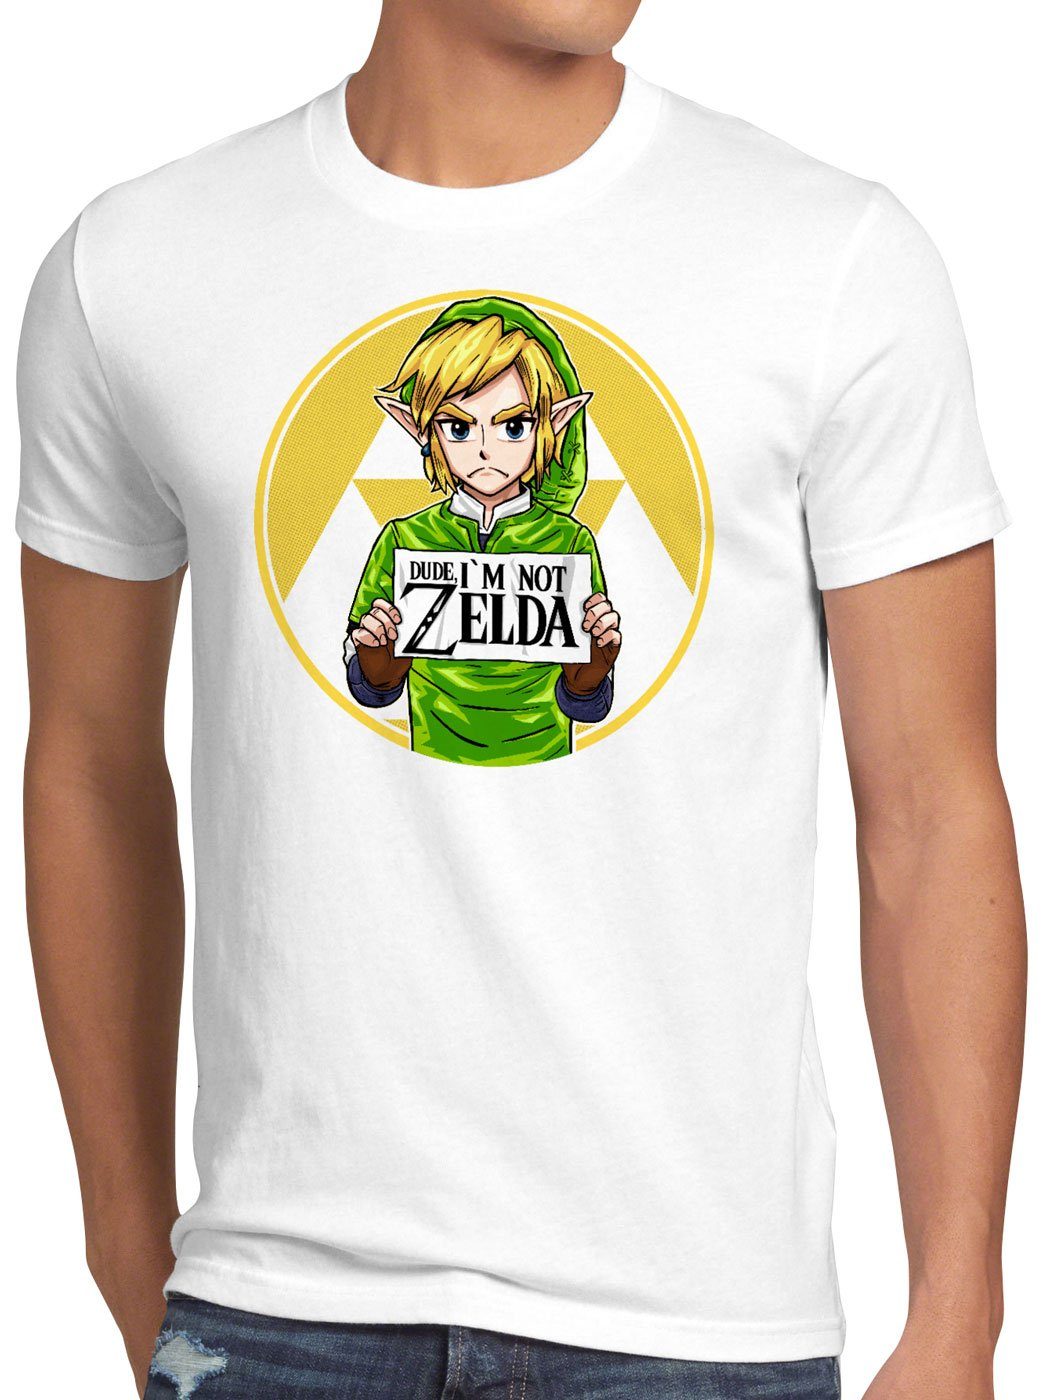 I prinzessin T-Shirt switch style3 weiß Zelda link Herren not am Print-Shirt